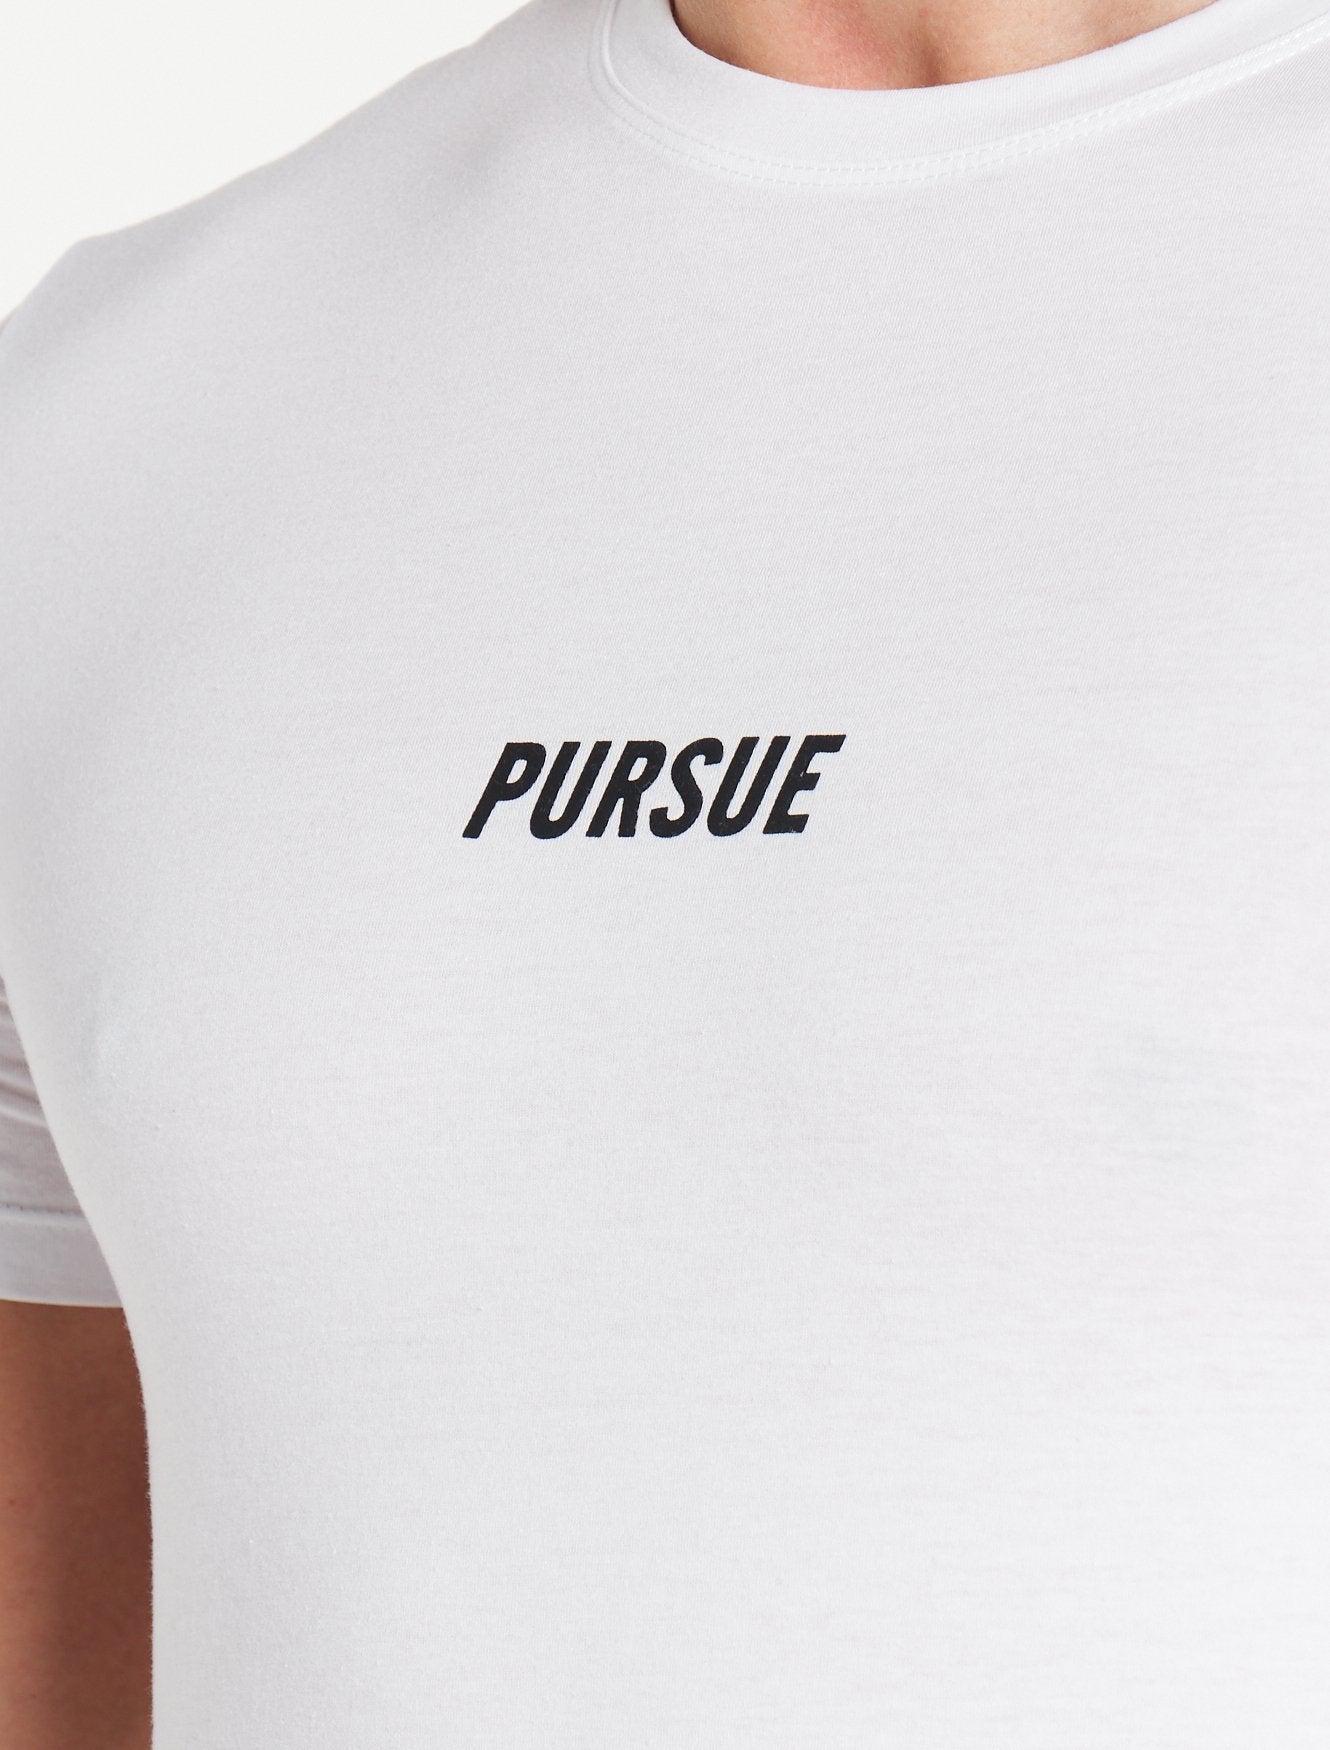 Essential T-Shirt / White Pursue Fitness 4